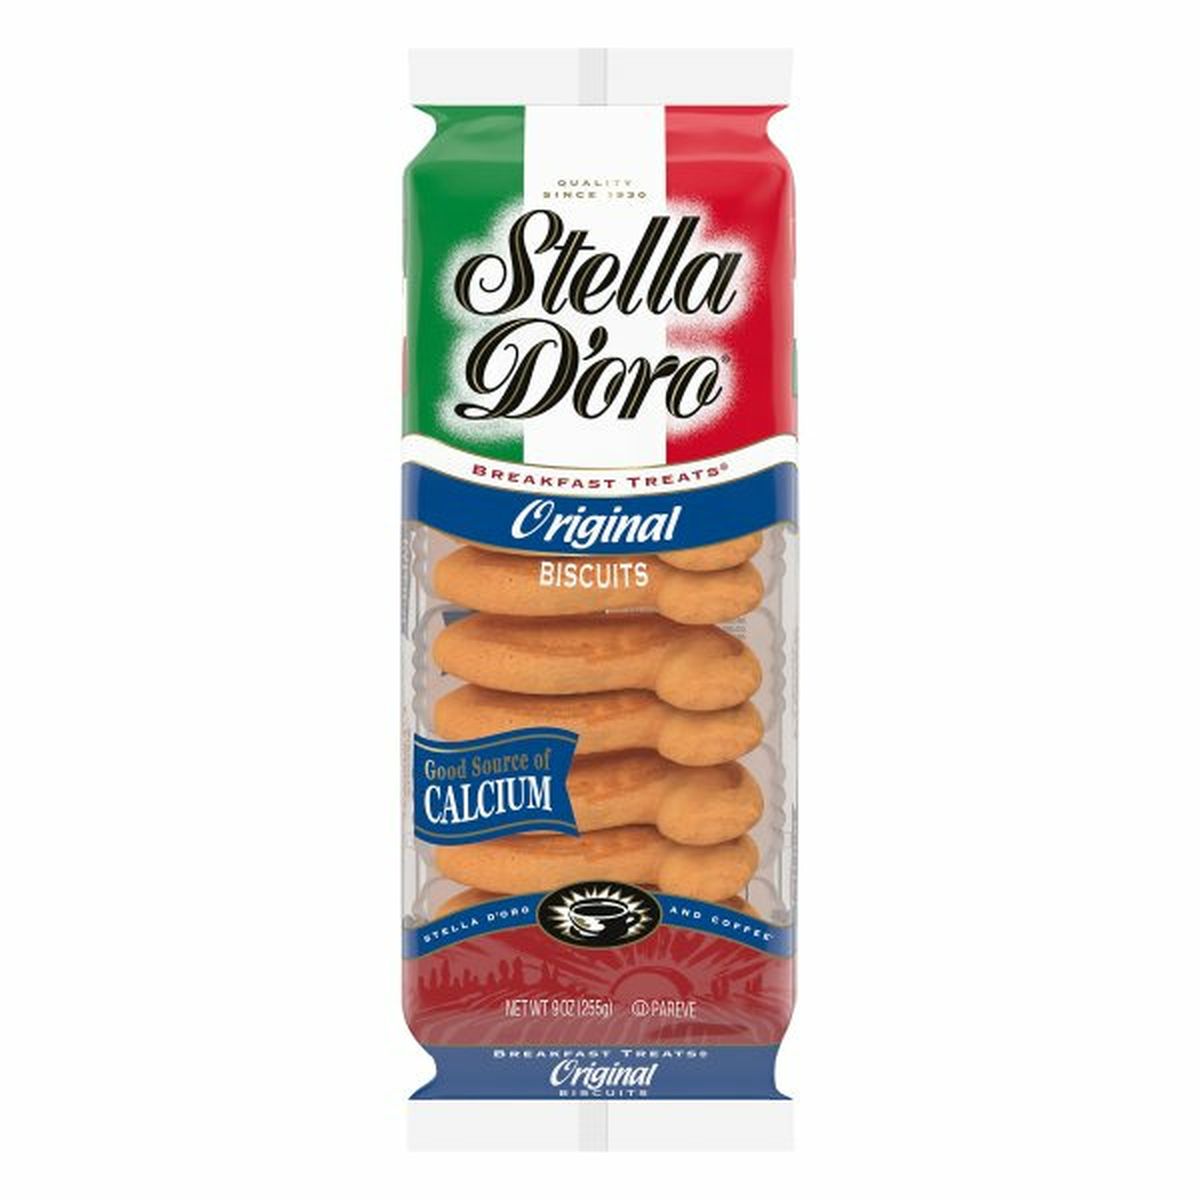 Calories in Stella D'oros Biscuits, Original